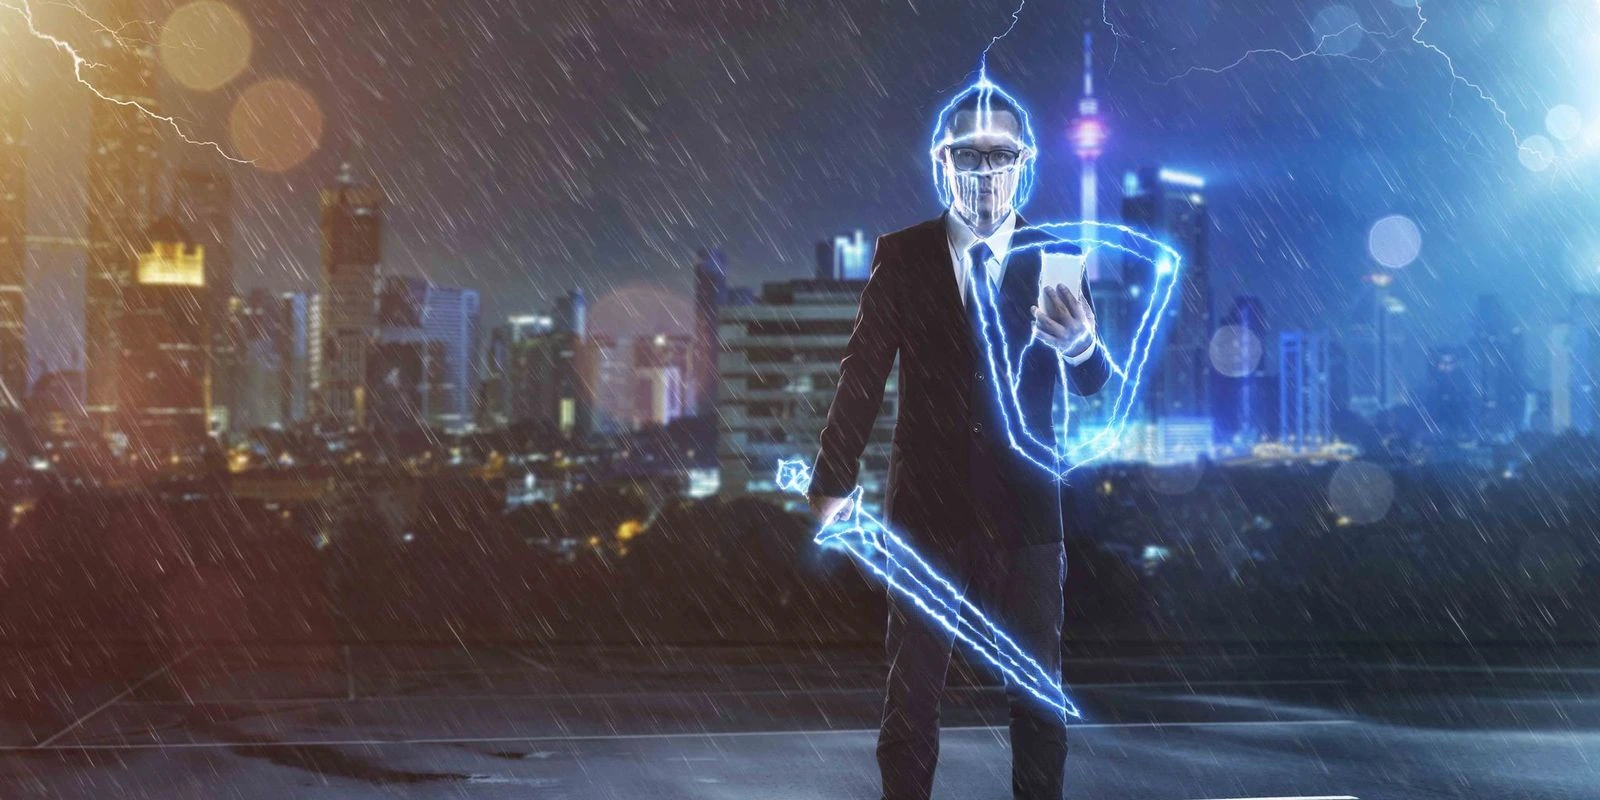 businessman wielding digital sword and armor against stylized urban backdrop